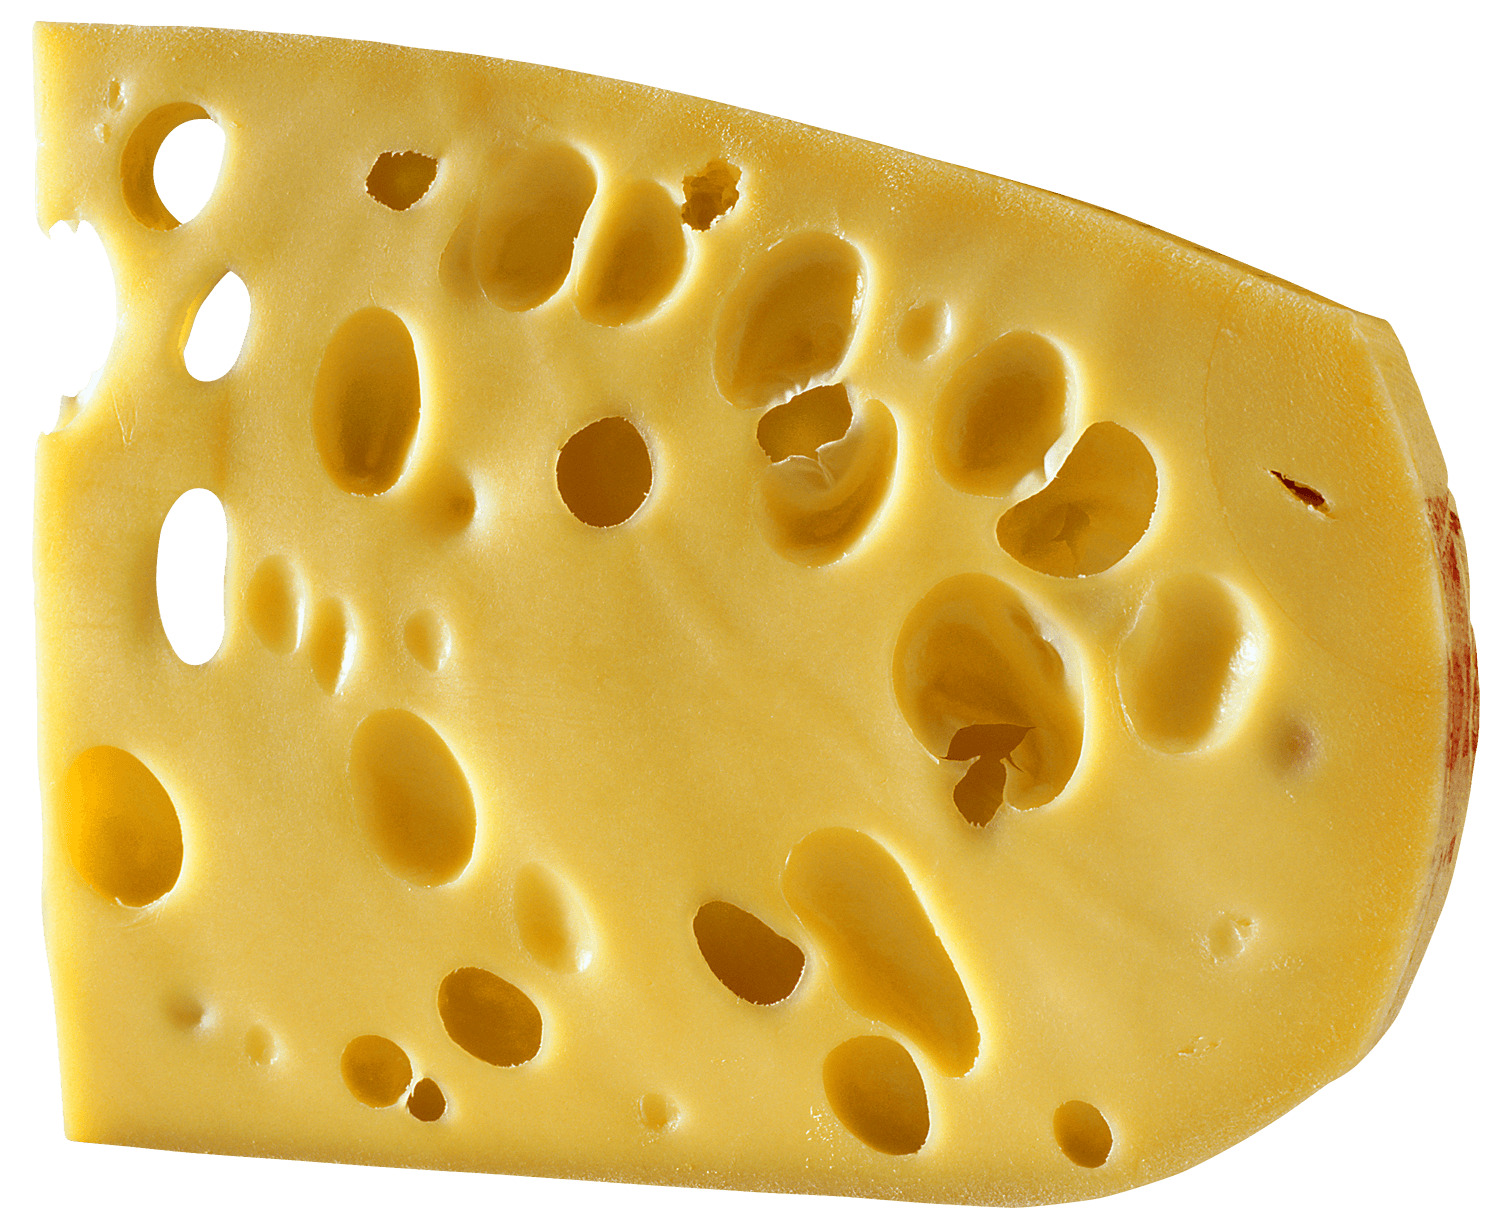 Cheese Gruyere Photo Slice icons